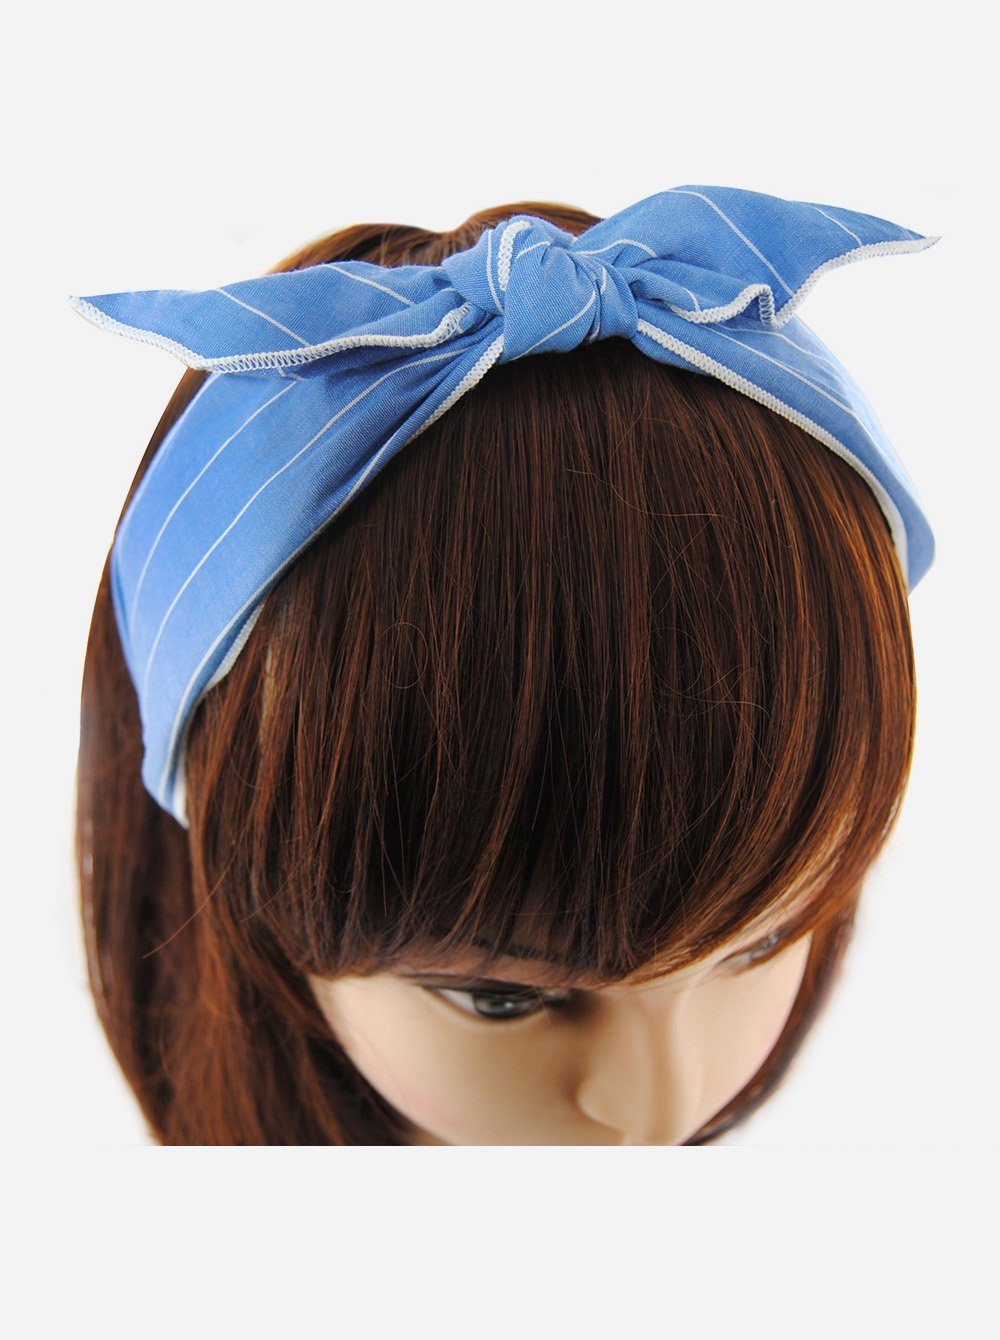 Breiter in Haarreif Haareifen Blau mit Vintage Haarreif Damen Schleife axy Haarband Tuchoptik,